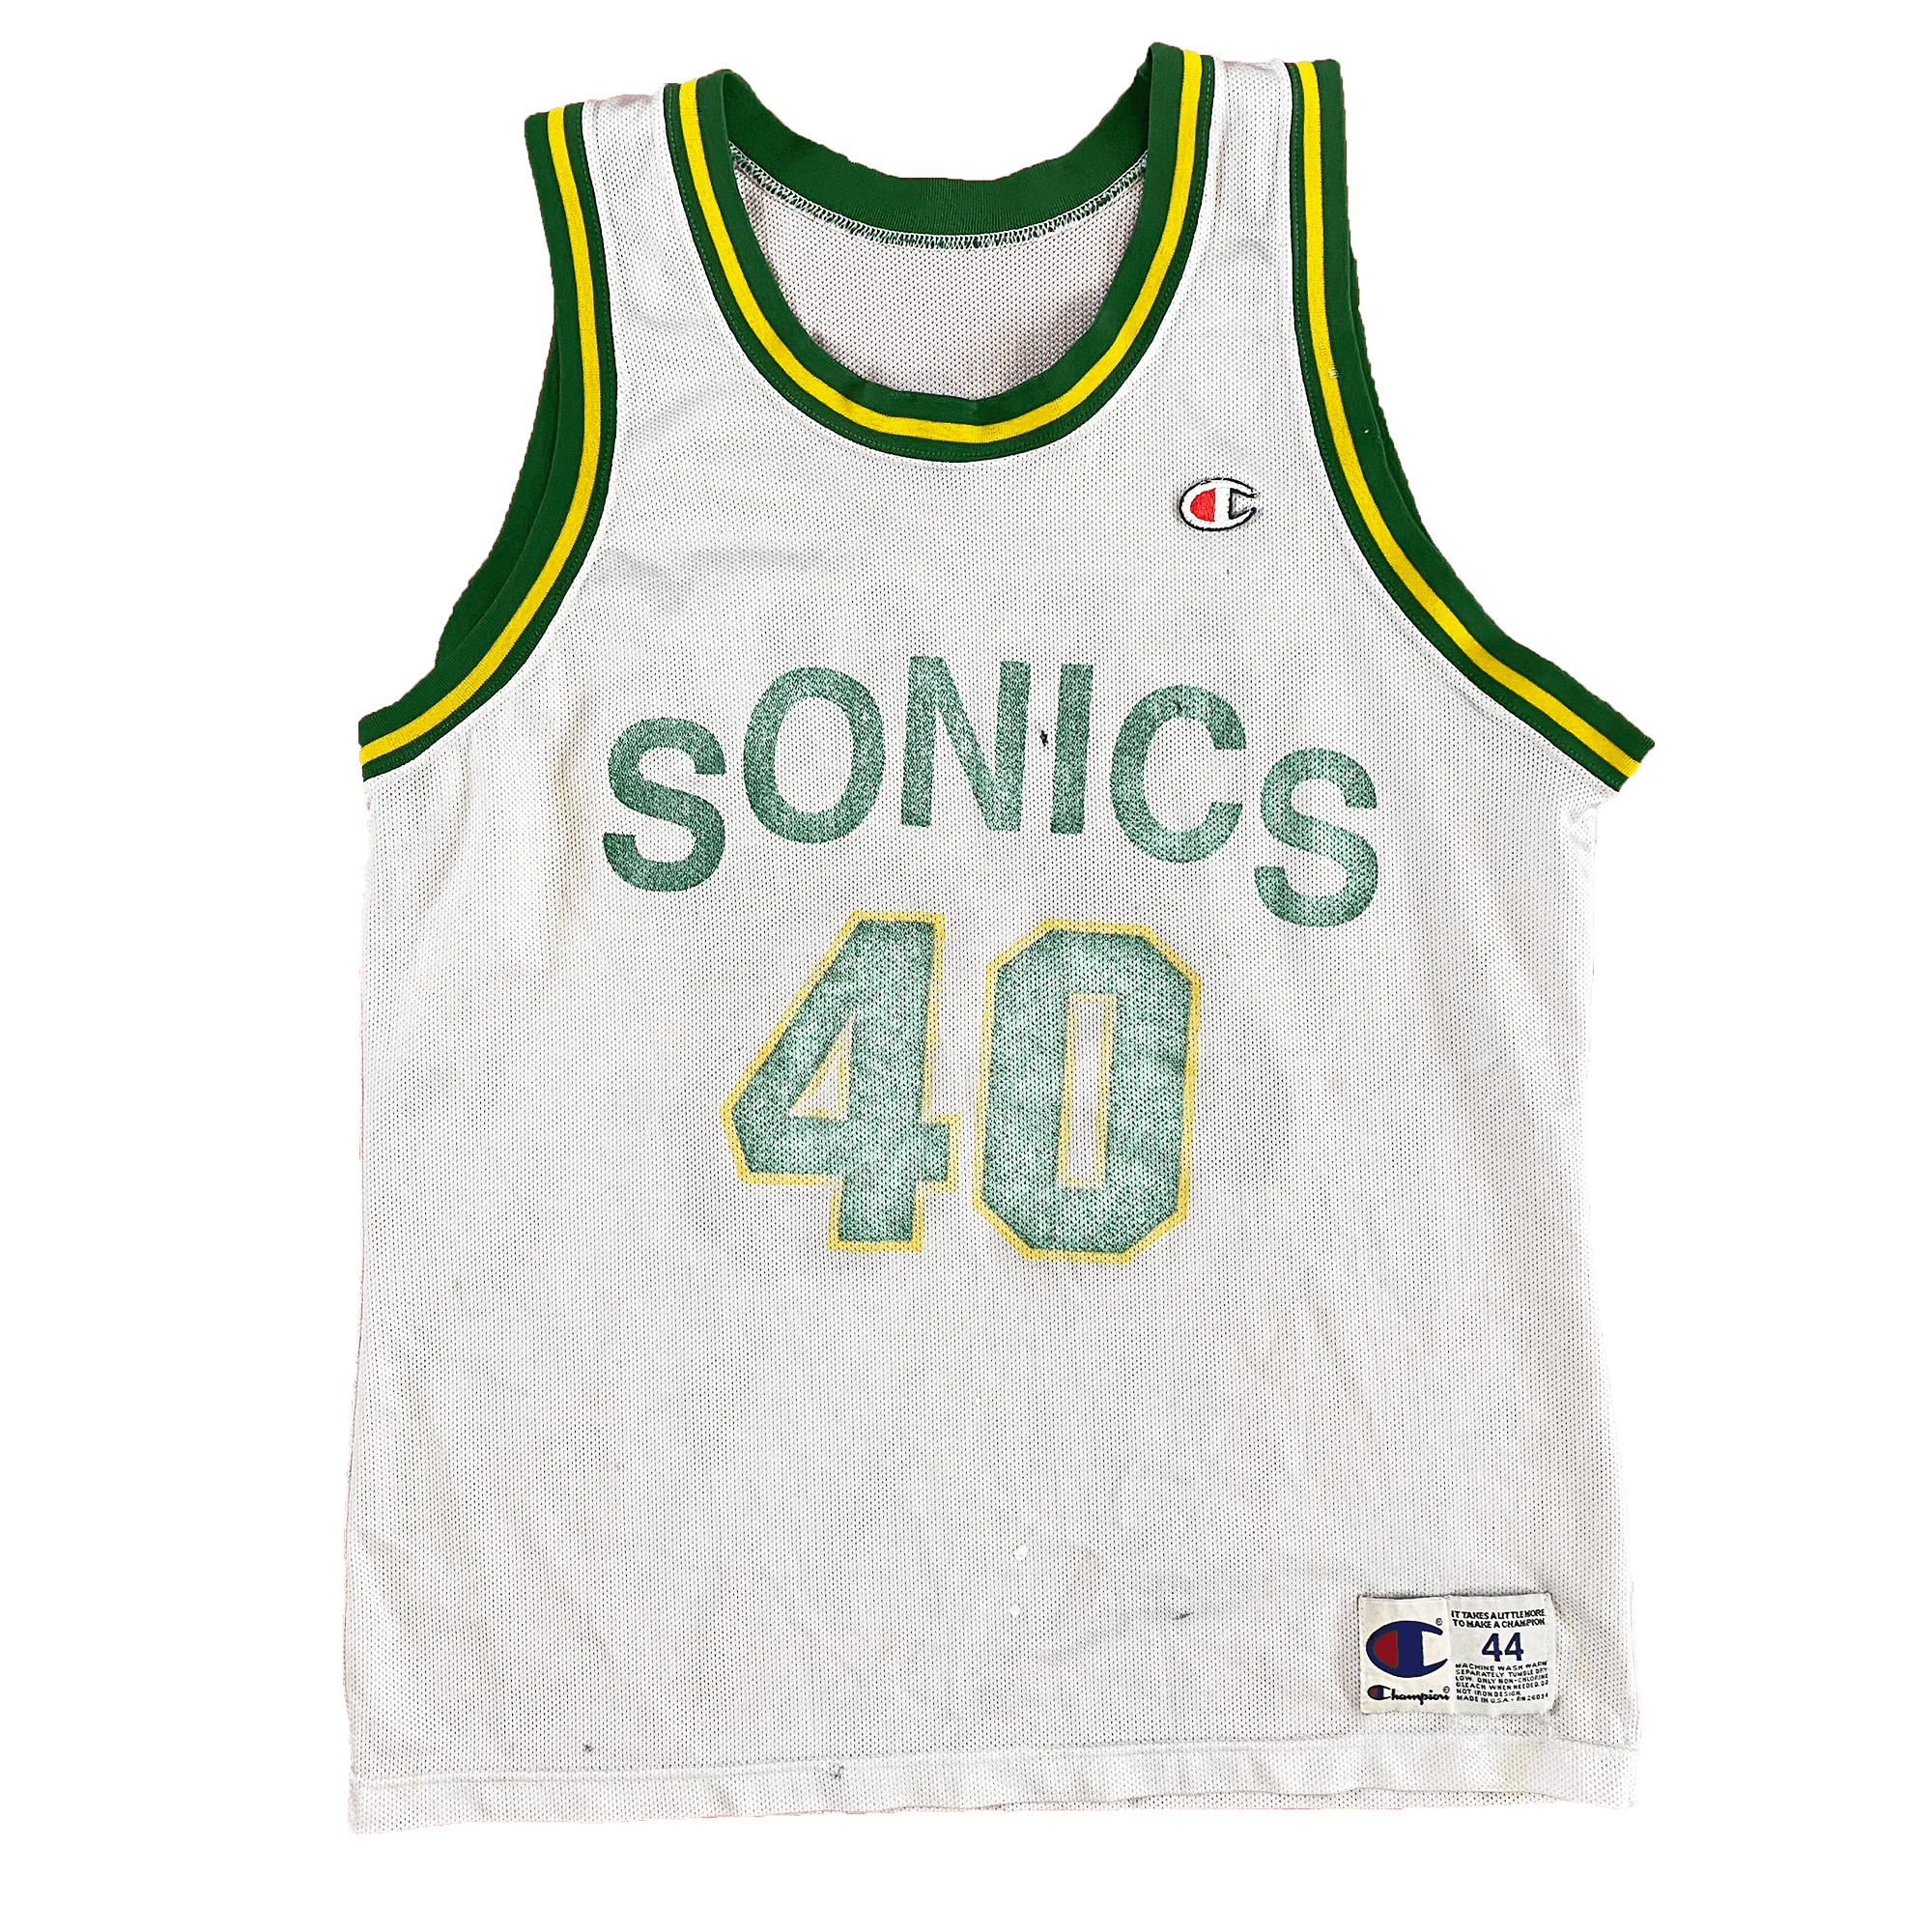 vintage sonics jersey